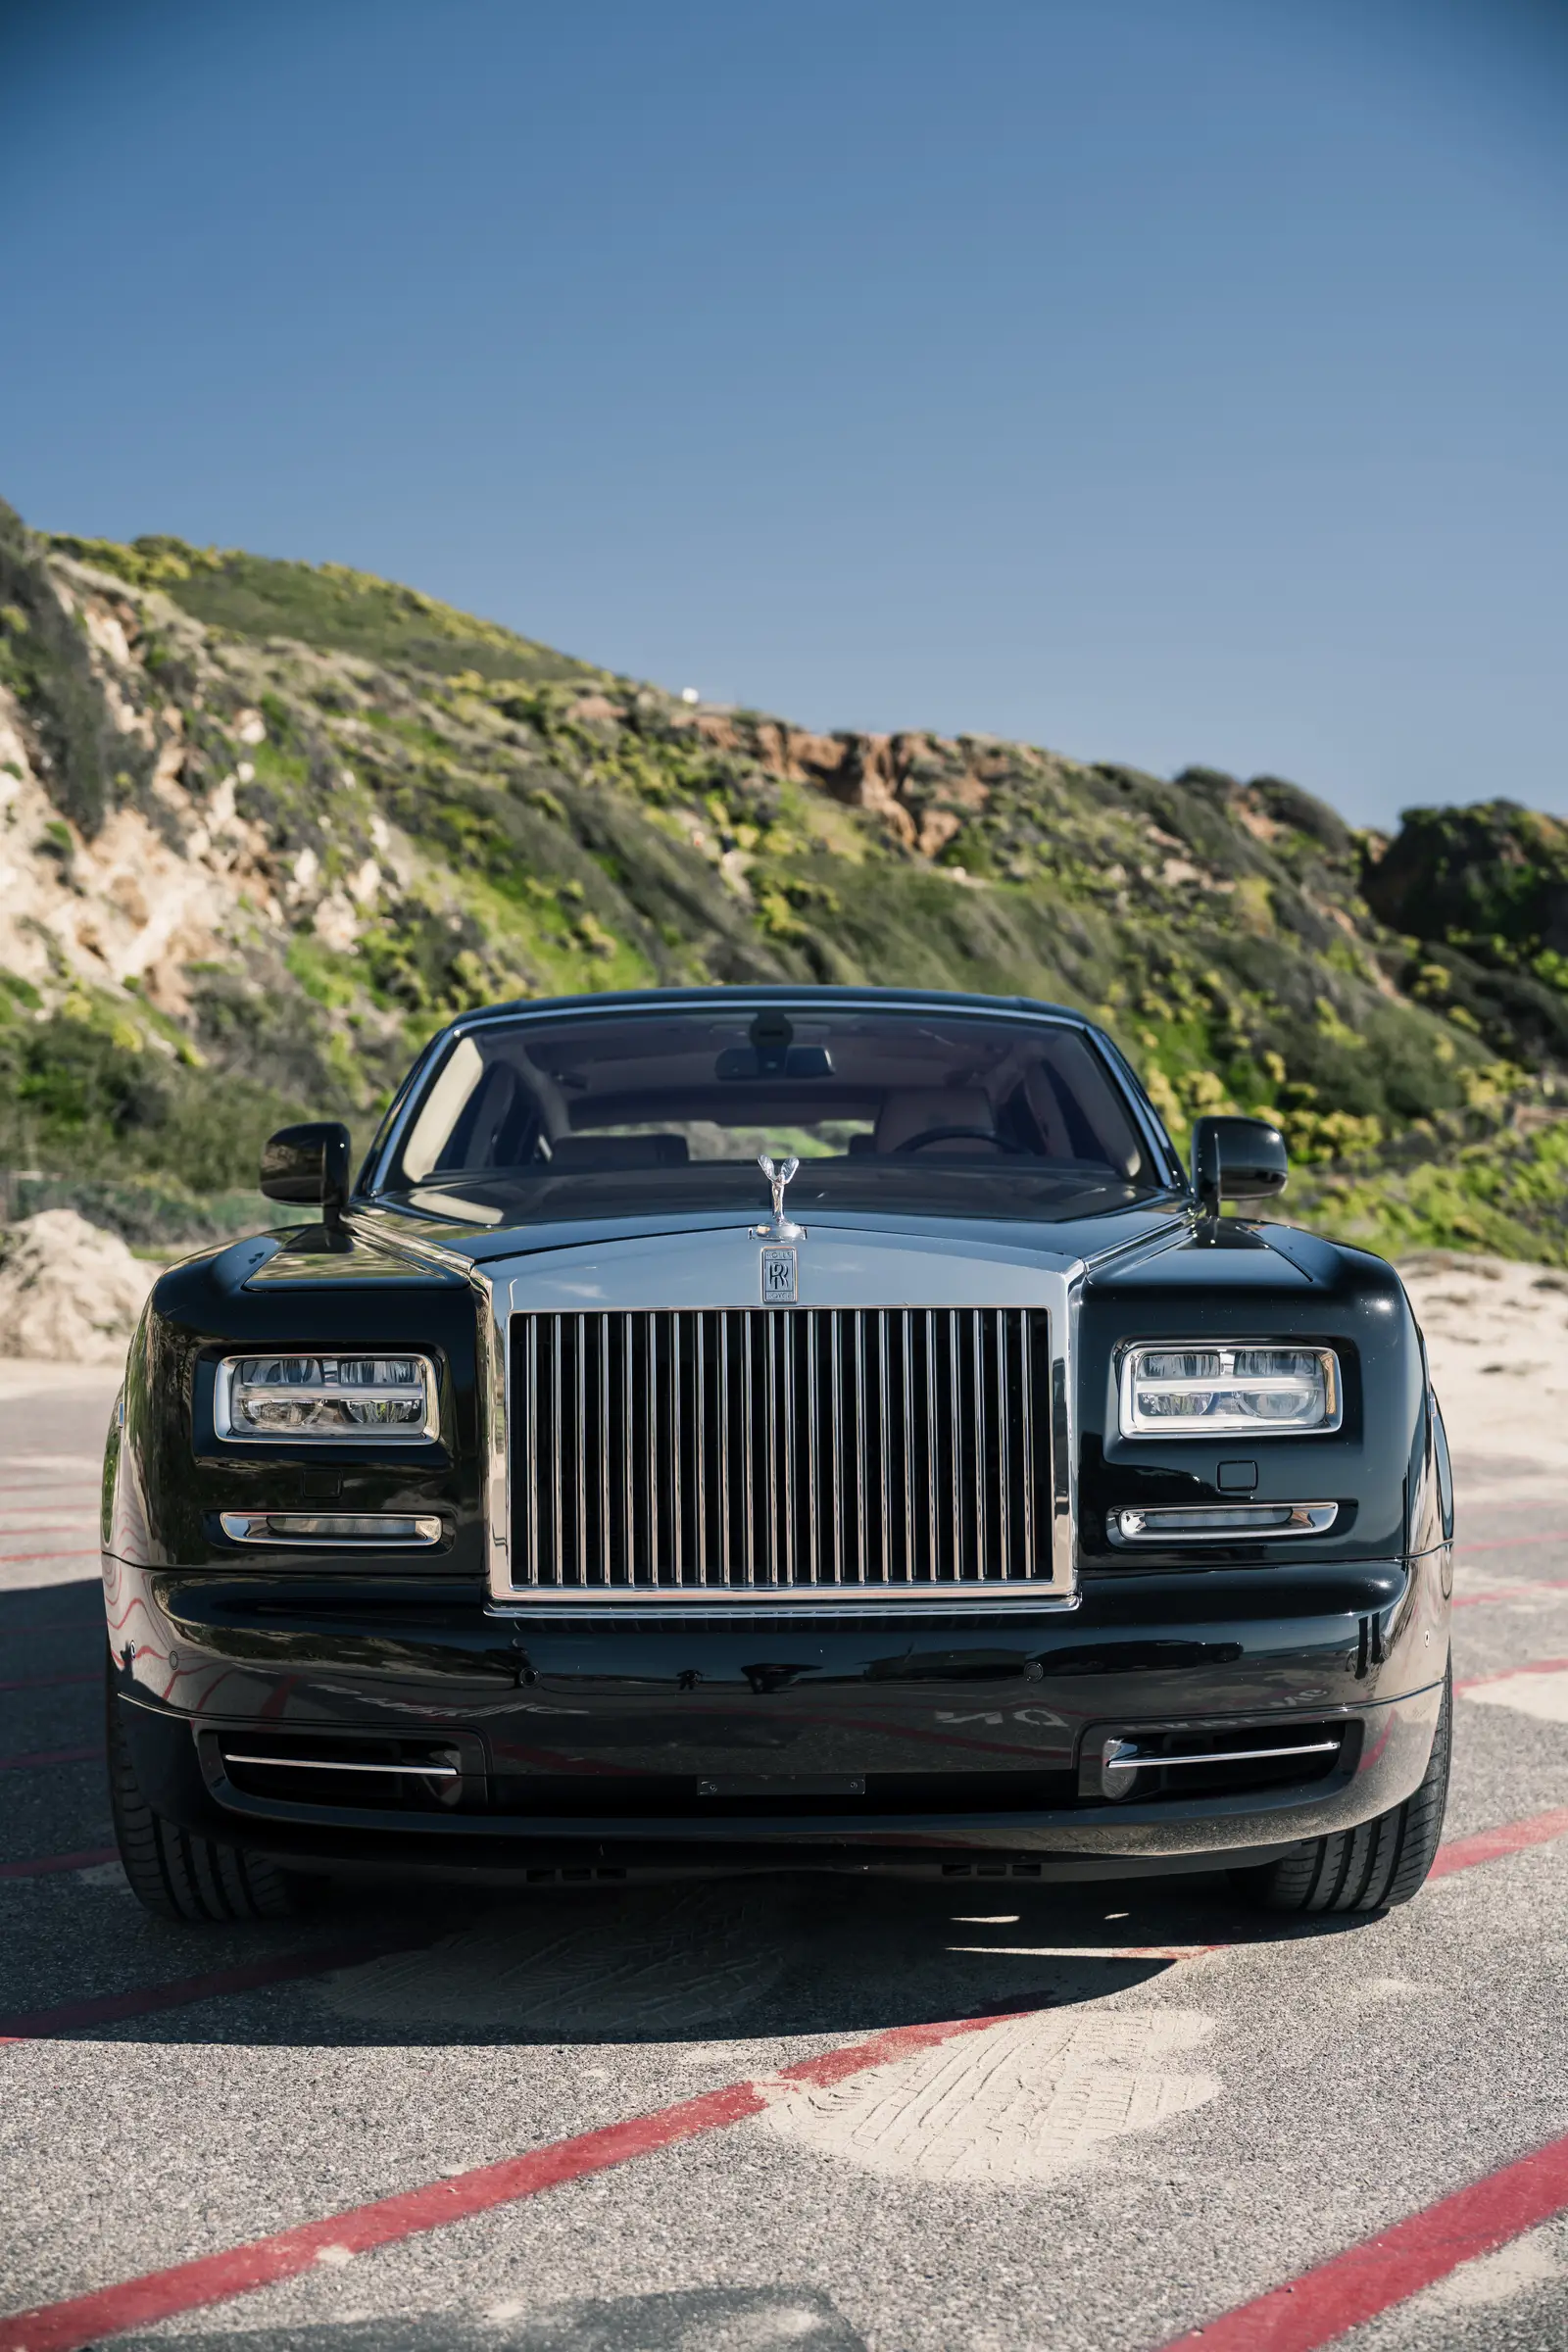 Rolls Royce Phantom Limousine Rental Los Angeles  Anytime Limo